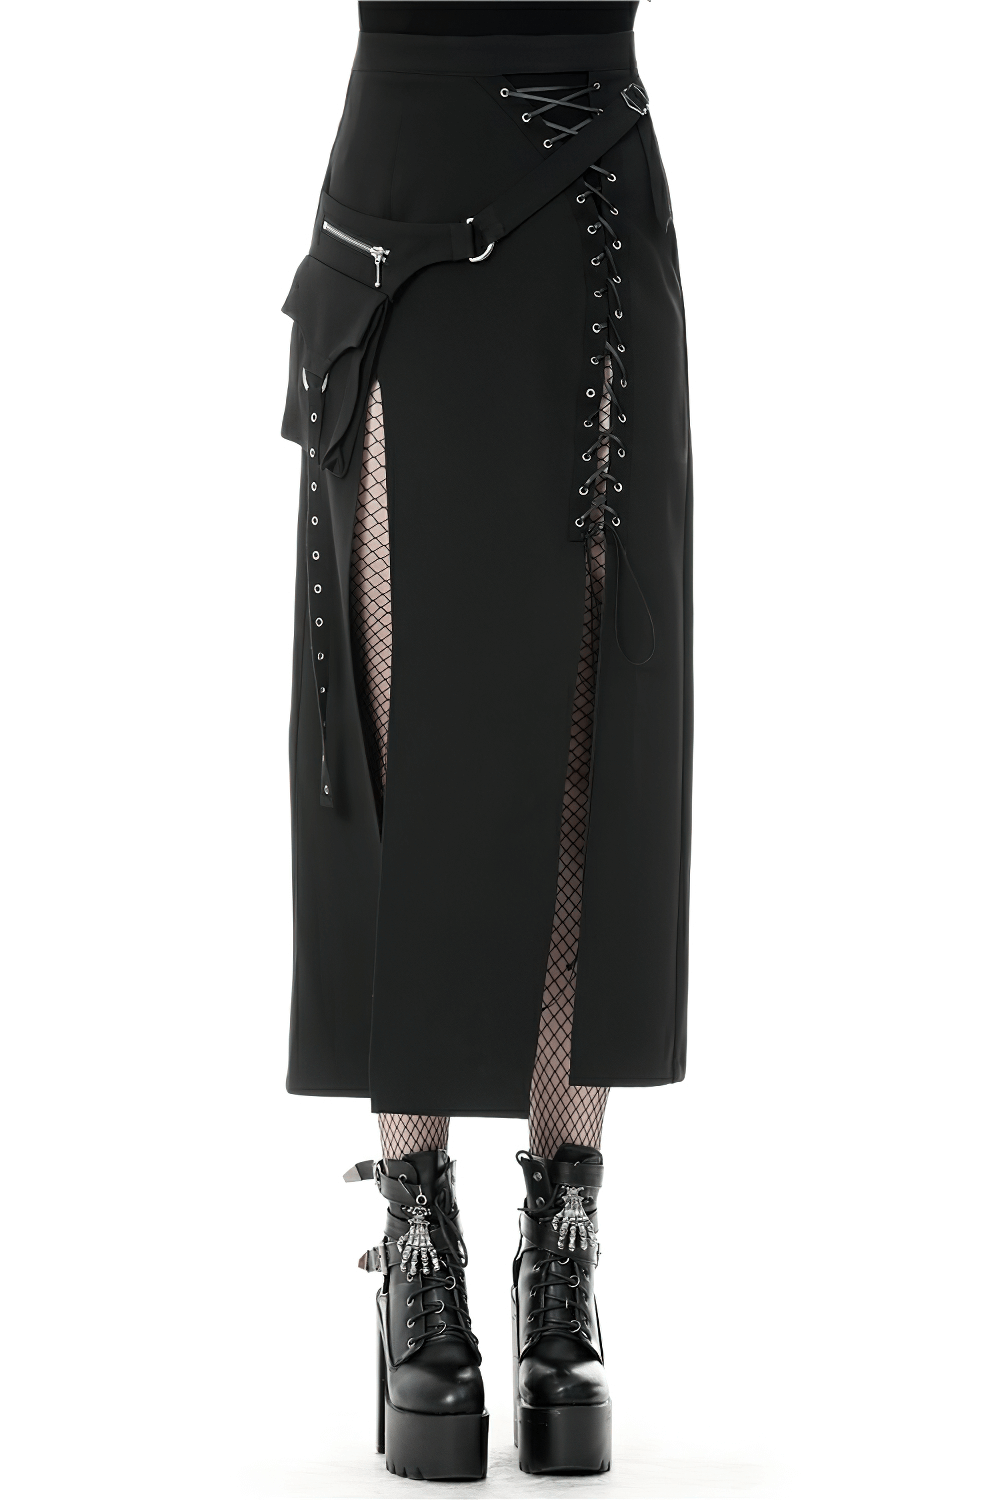 Stylish Gothic Lace-Up Metal Eyelet Skirt with Pockets